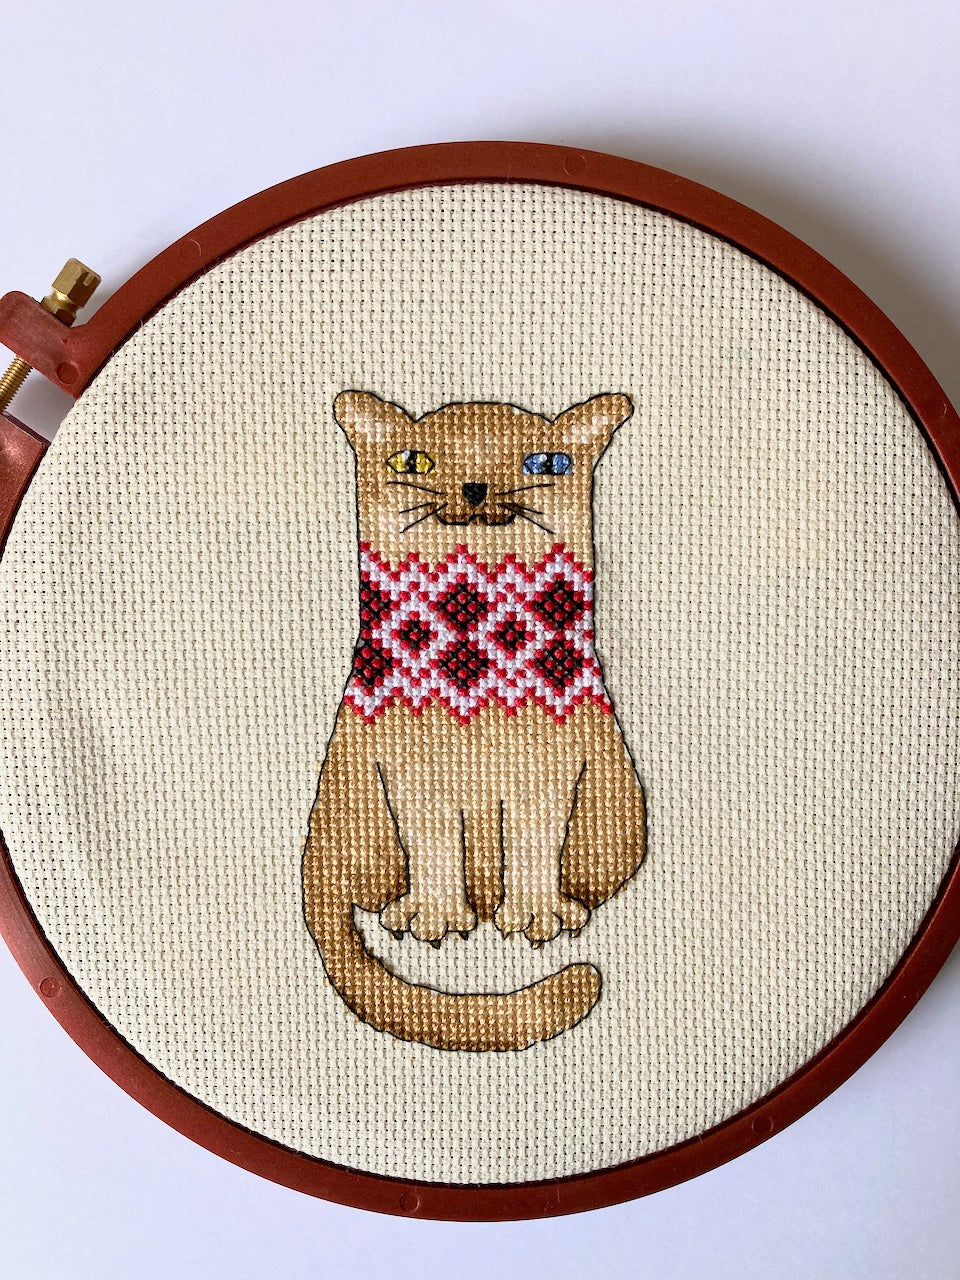 Ukrainian cat cross stitch pattern-3